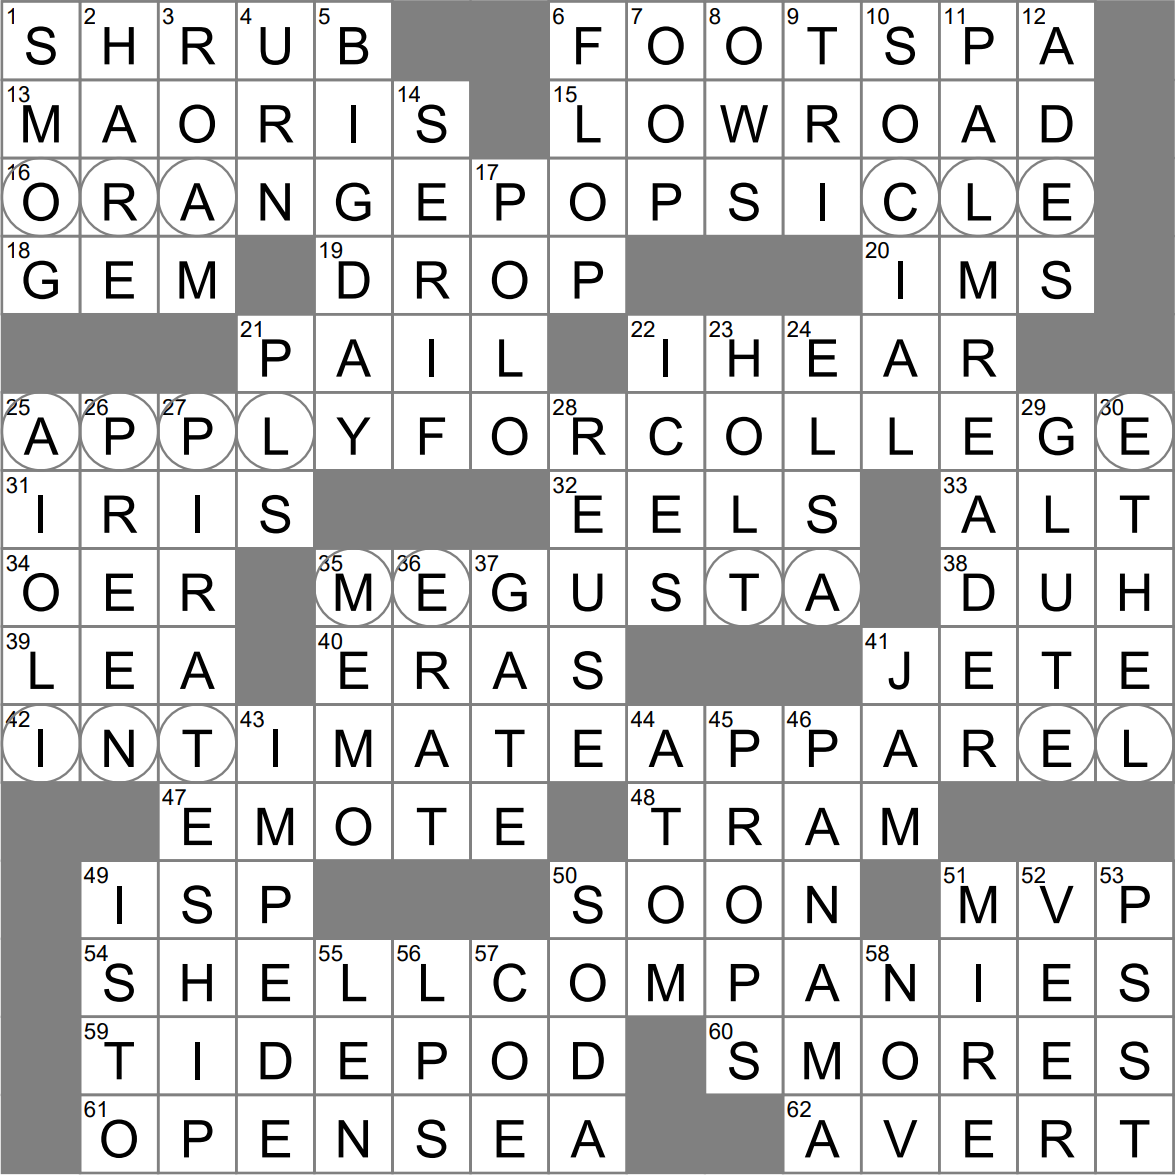 LA Times Crossword 21 Jun 23 Wednesday LAXCrossword com